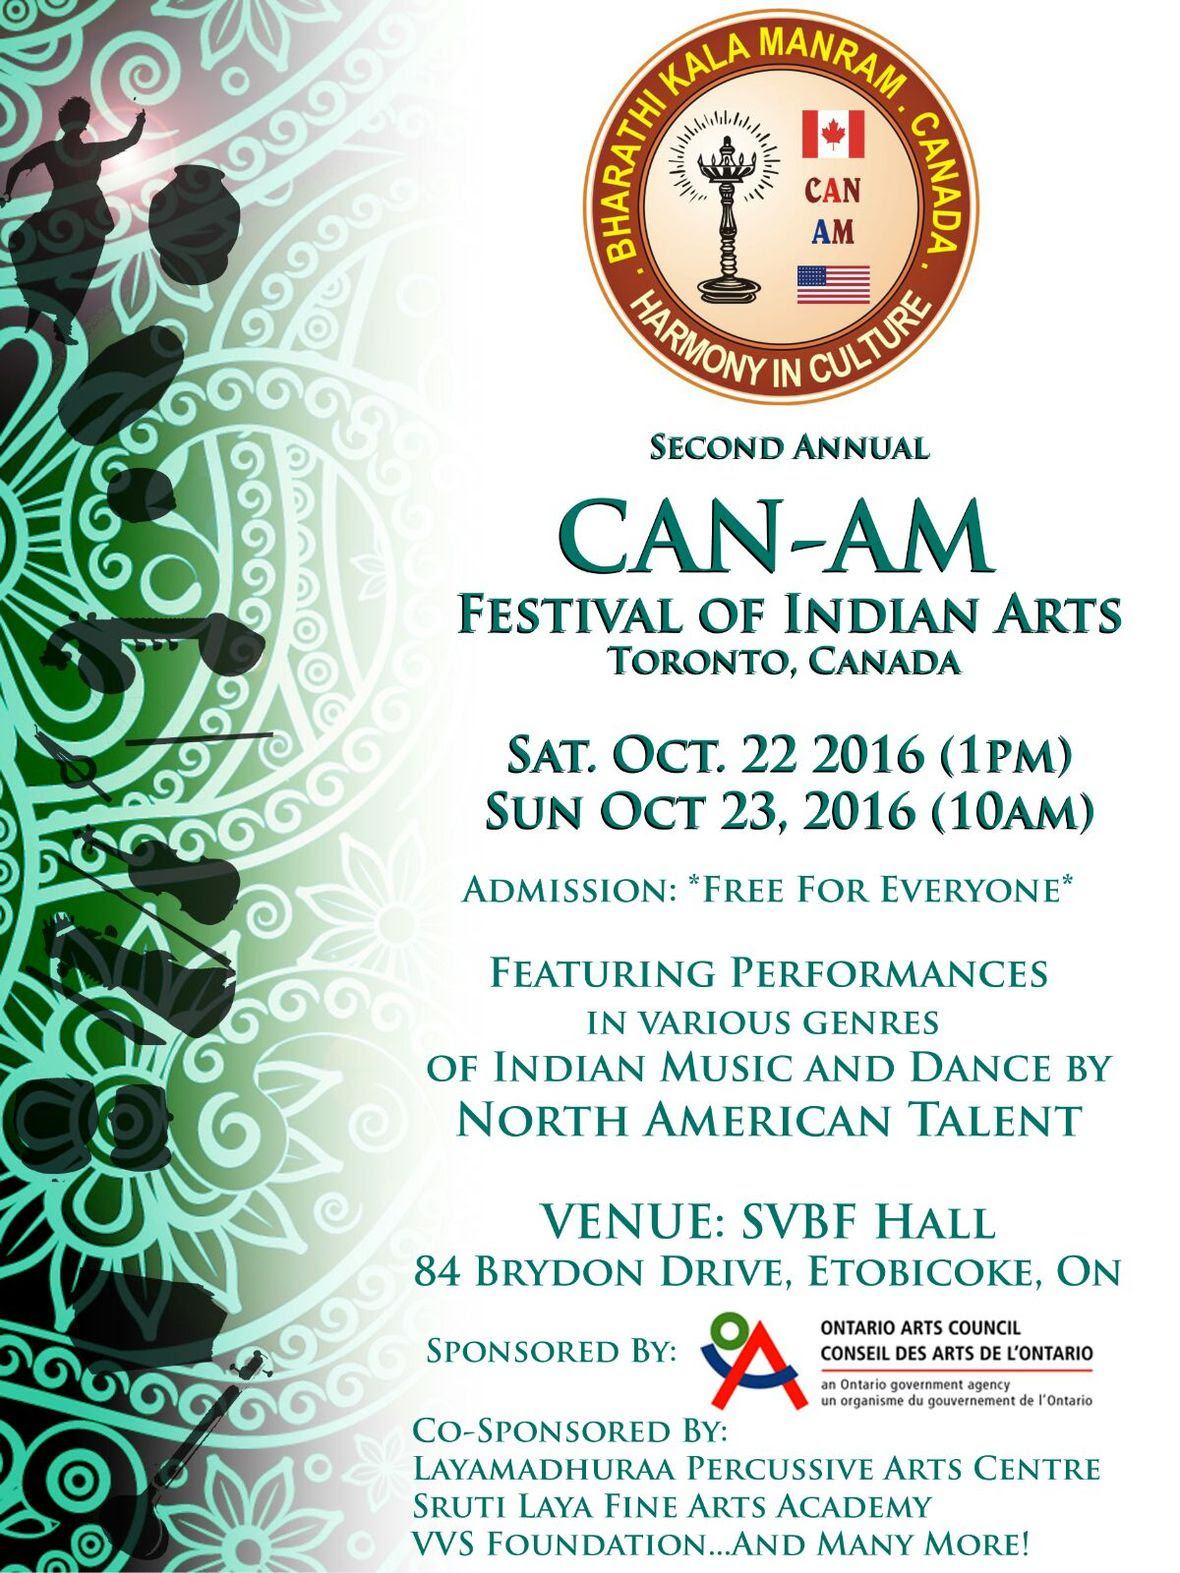 canamfestival-toronto-canada-oct2016